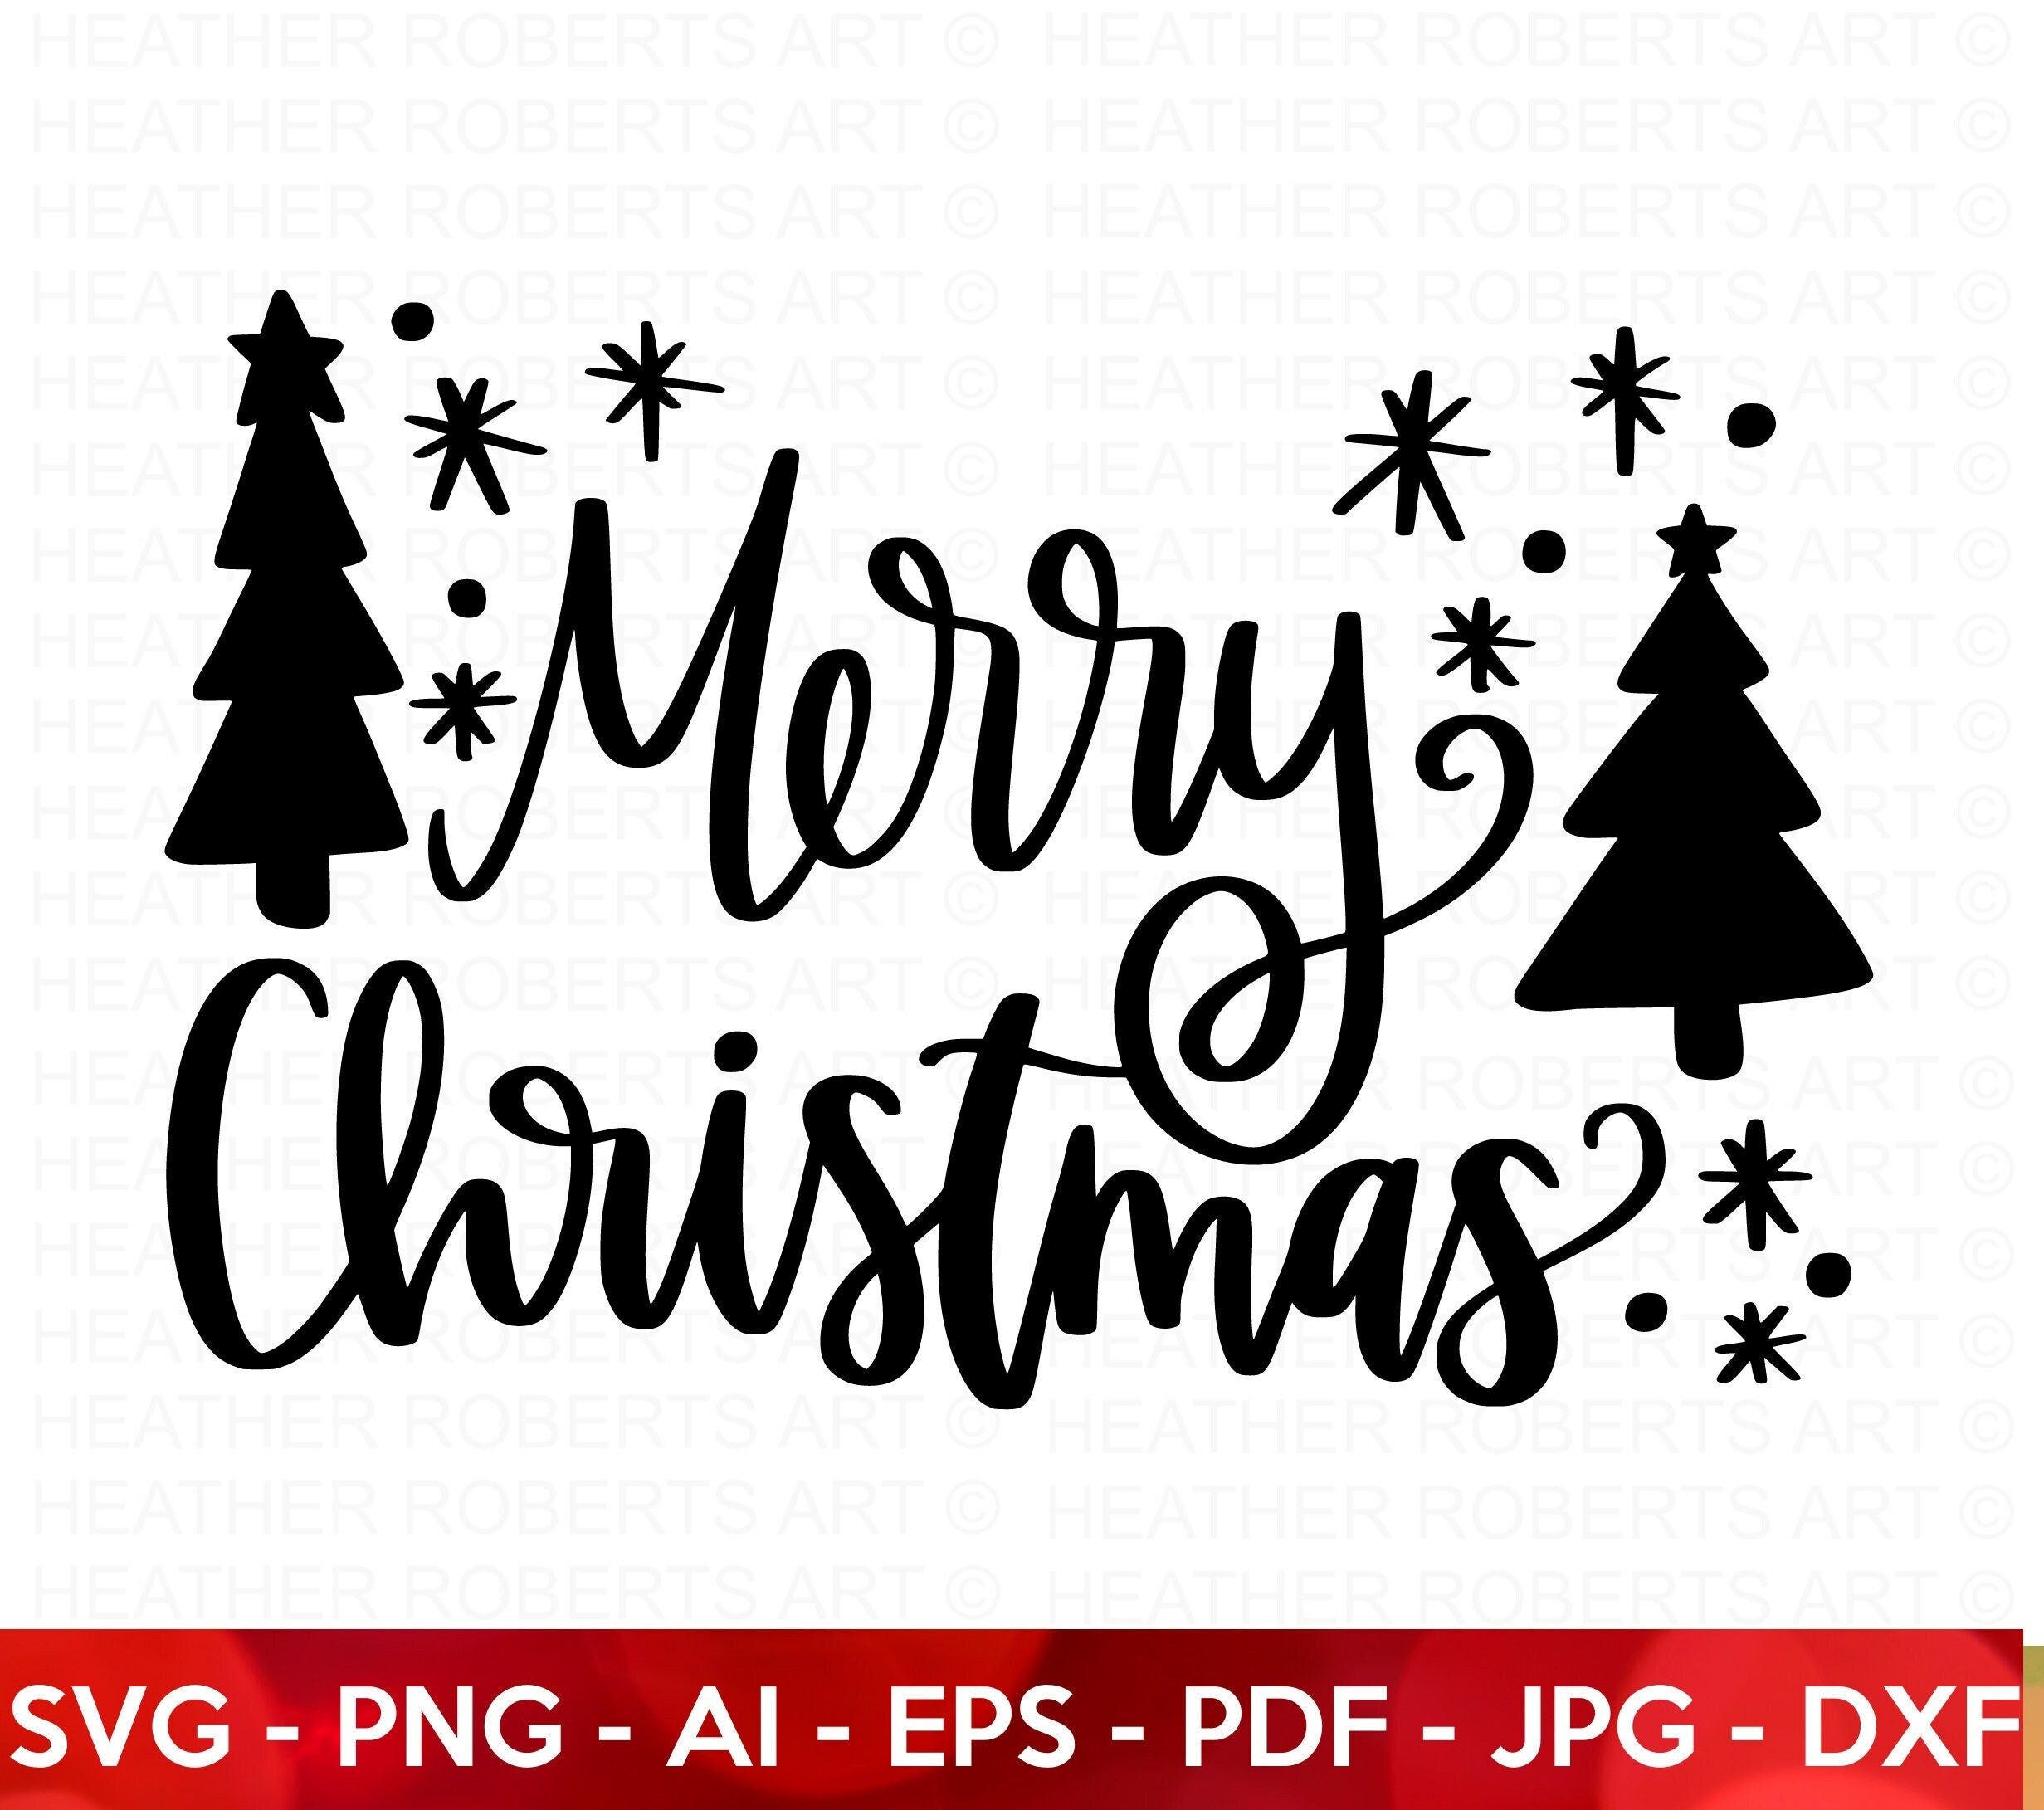 Merry Christmas SVG, Christmas Sign svg, Mistletoe svg, Winter SVG, Snowflakes svg, Christmas svg, Holiday svg, Cricut Cut File, Silhouette